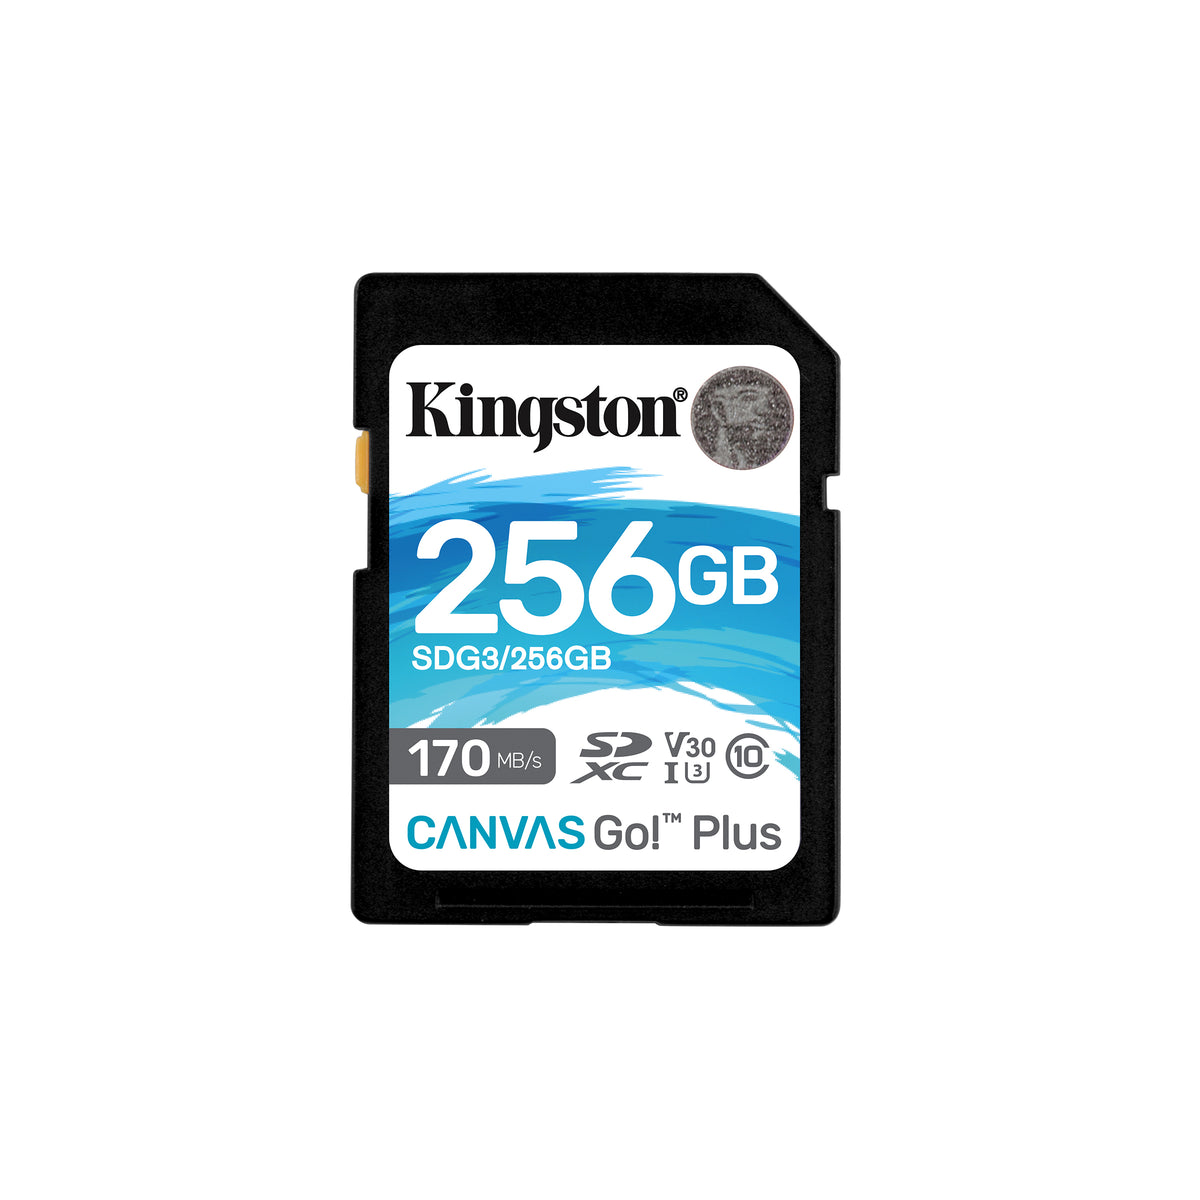 Micro SDXC karta Kingston 256GB (SDG3/256GB)